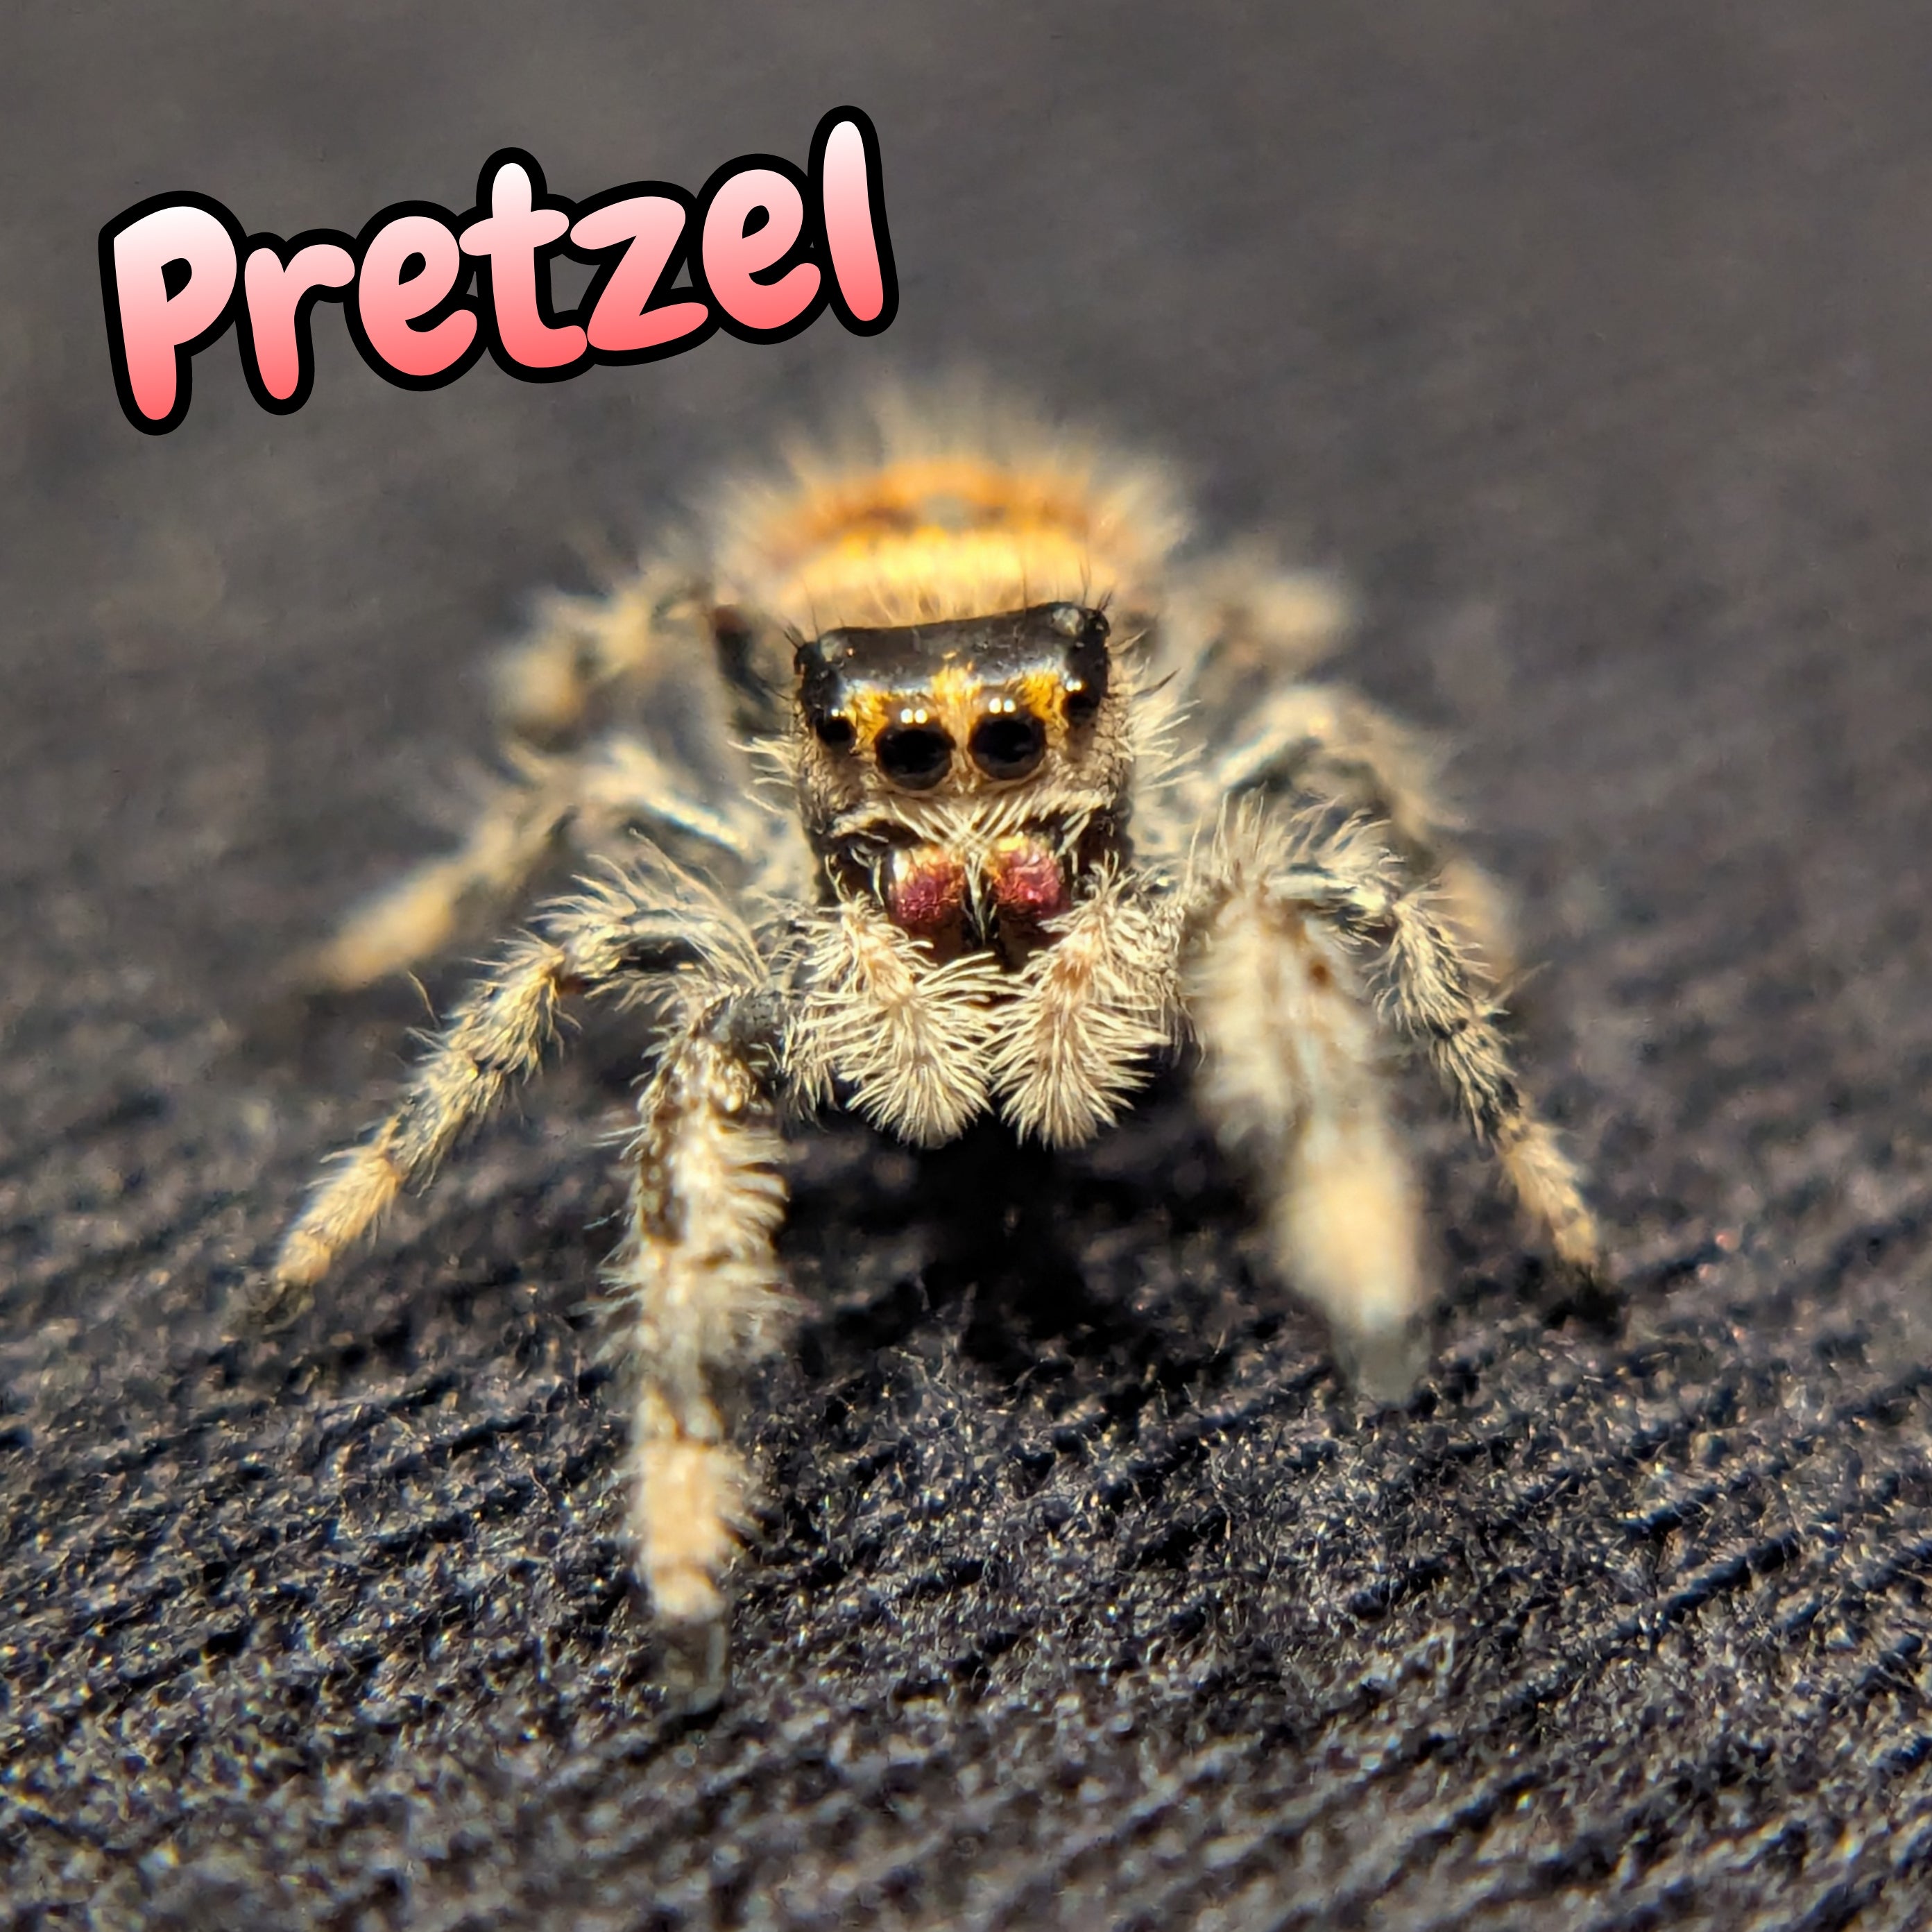 Regal Jumping Spider "Pretzel"